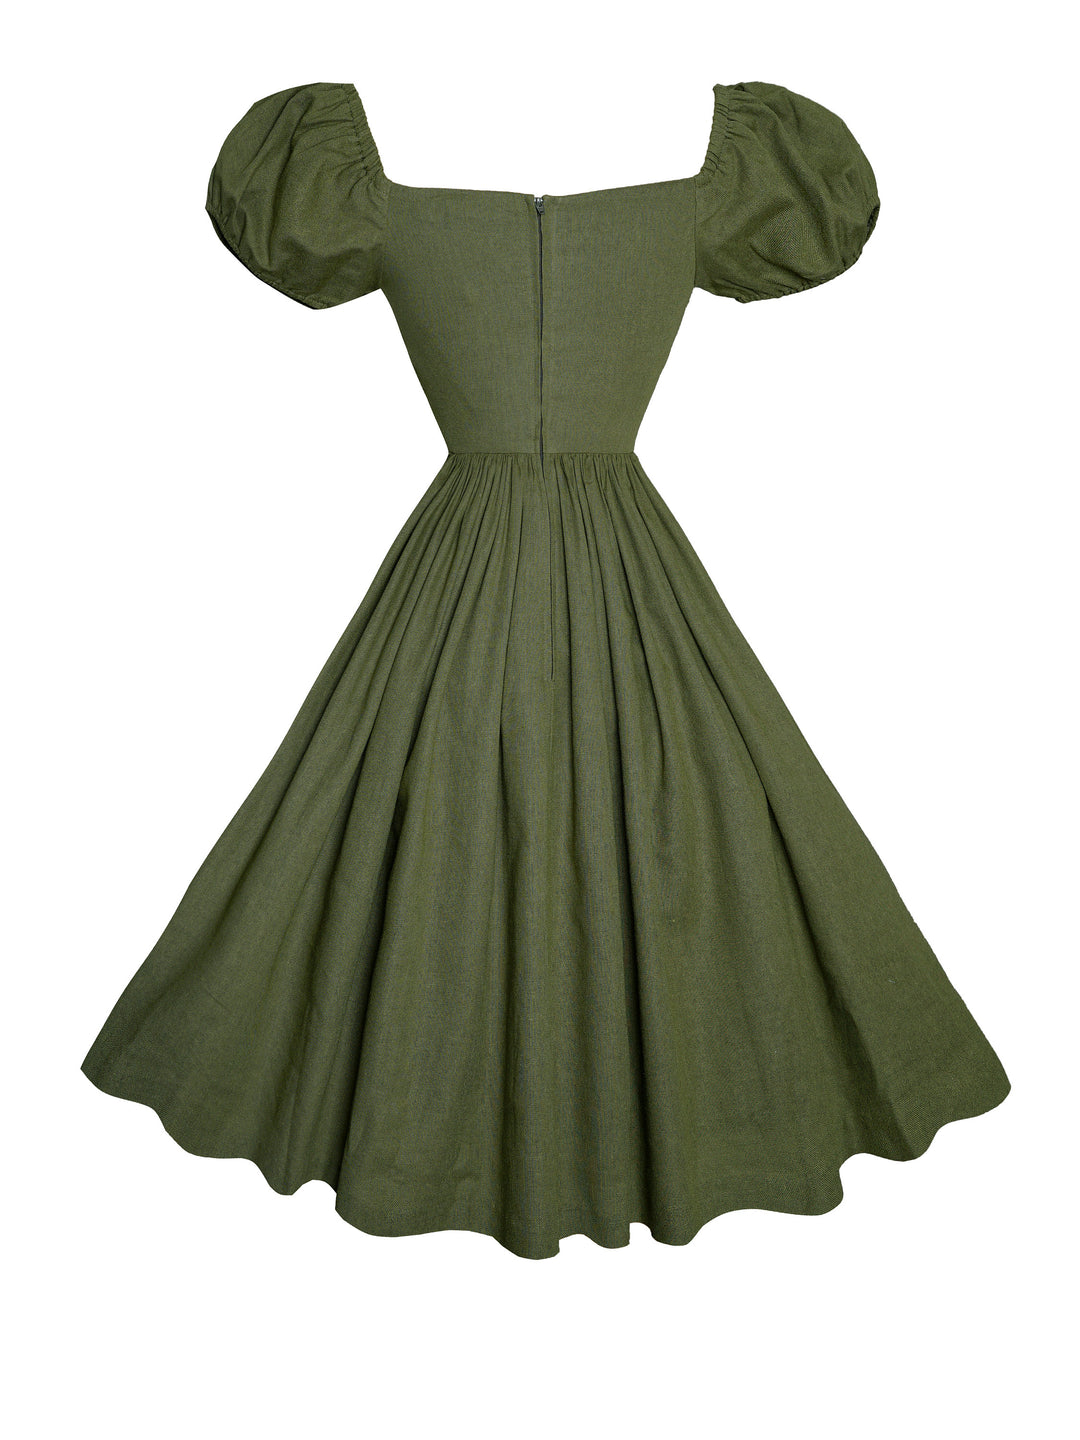 MTO - Loretta Dress in Hunters Green Linen